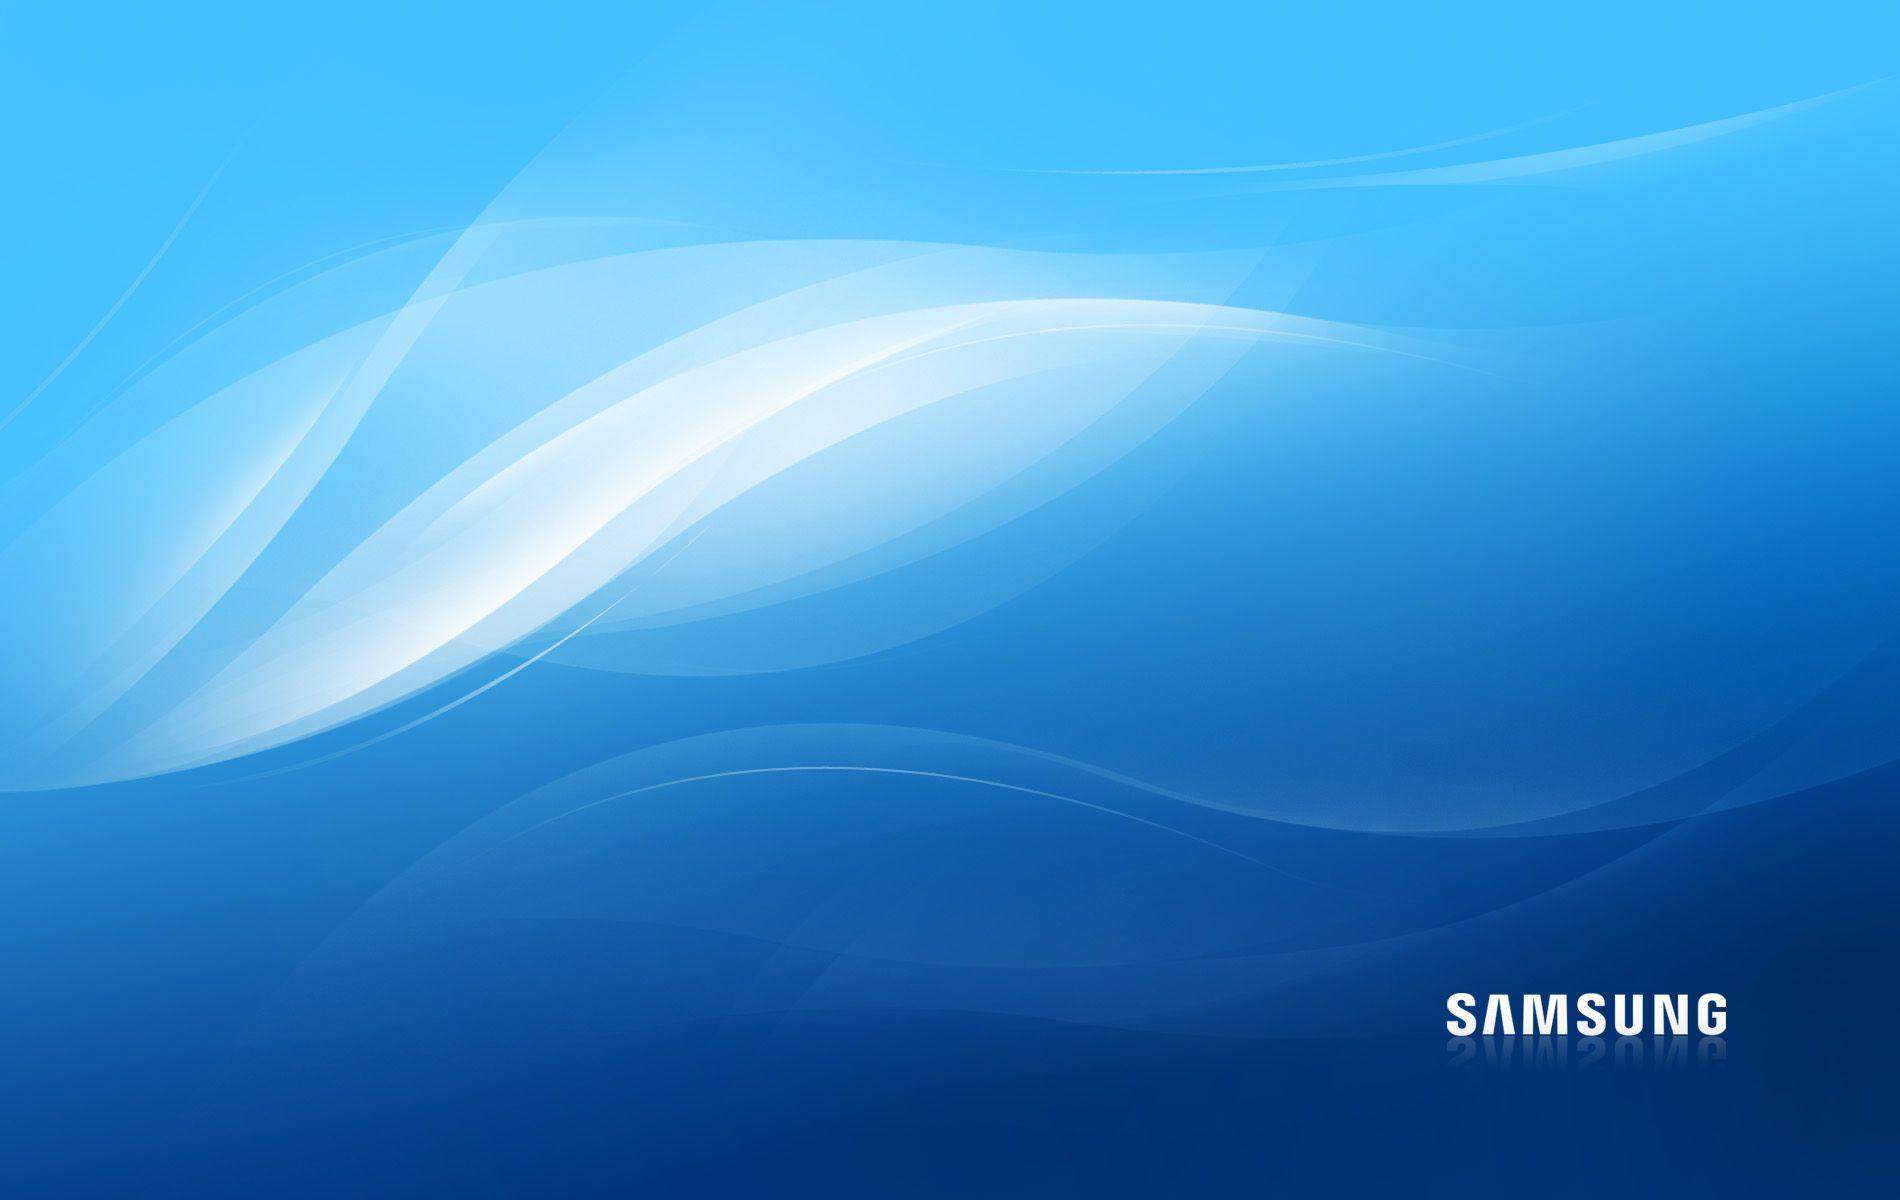 Cool Samsung Logo - Samsung Logo Wallpapers | wallpaper.wiki